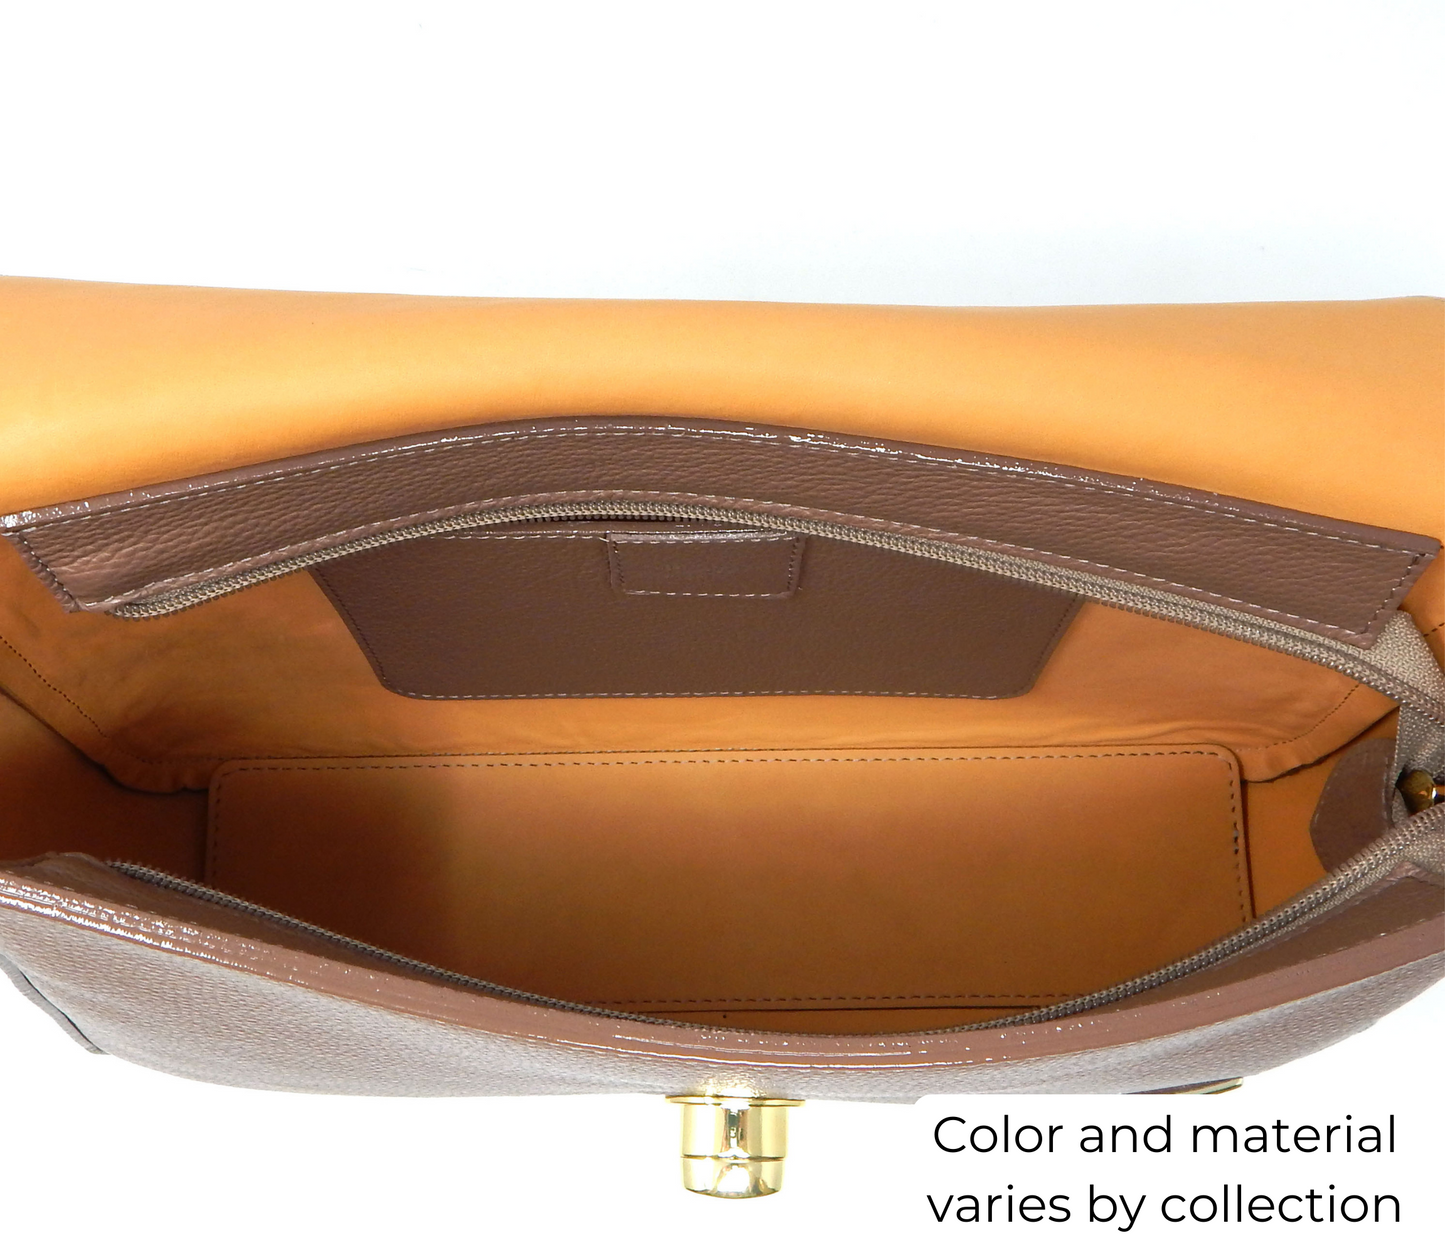 #color_ Red | Cavalinho Gallop Patent Leather Handbag - Red - inside_0515_2317bbd8-7b67-4f34-ae79-3d8affe952ee